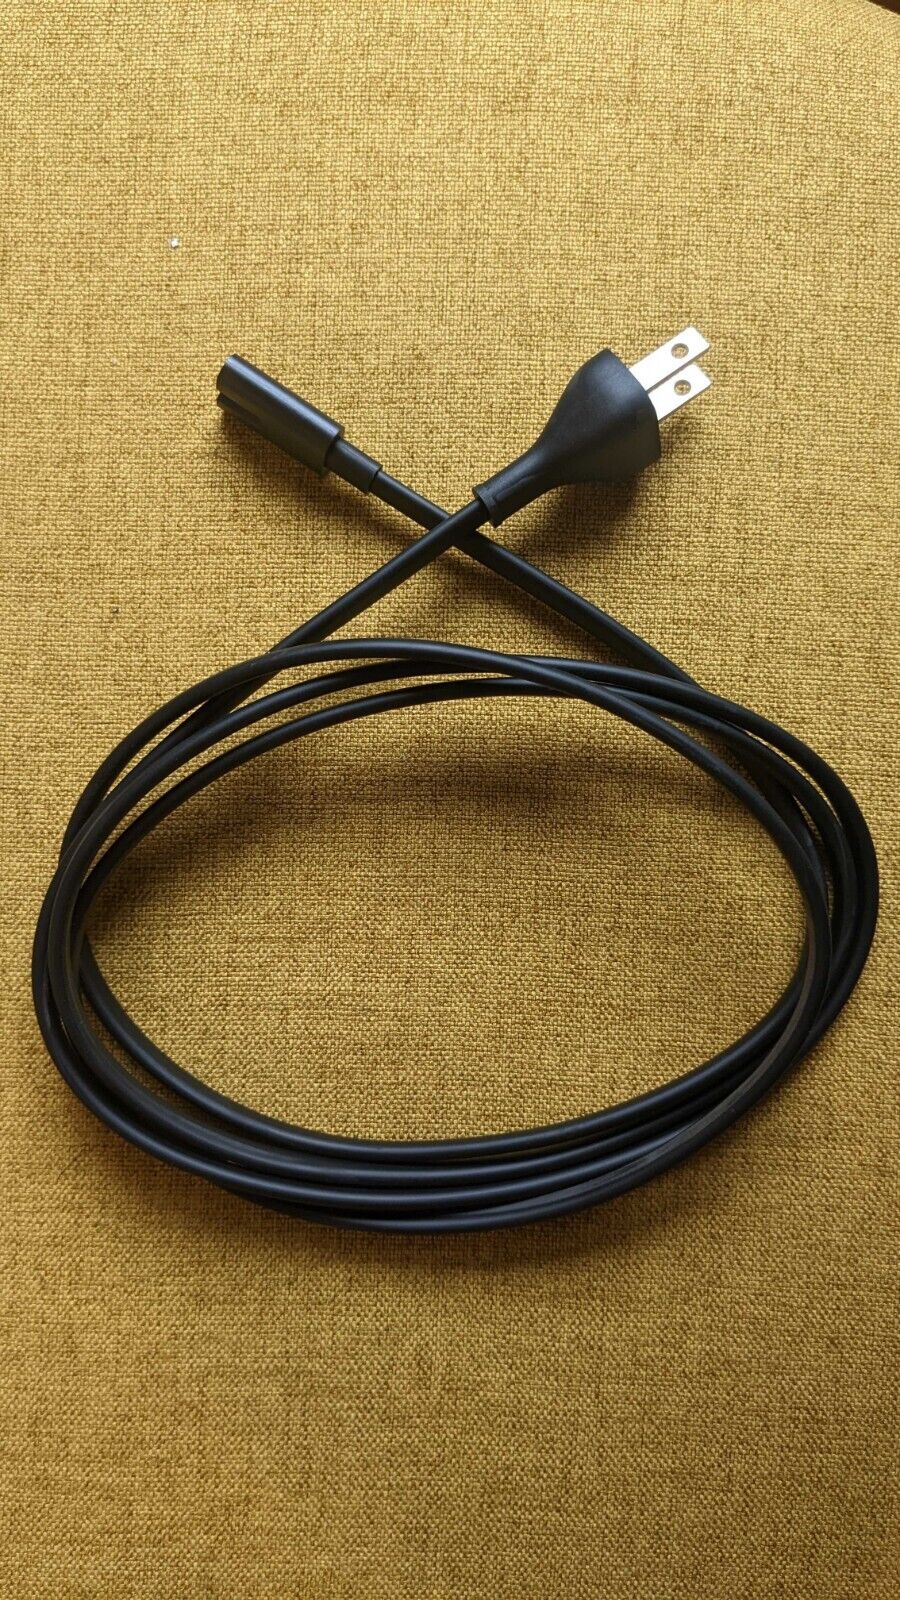 Original Apple 6'ft Power Cord for Mac Mini 2010-20 Models and APPLE TV 1-5 Gen 